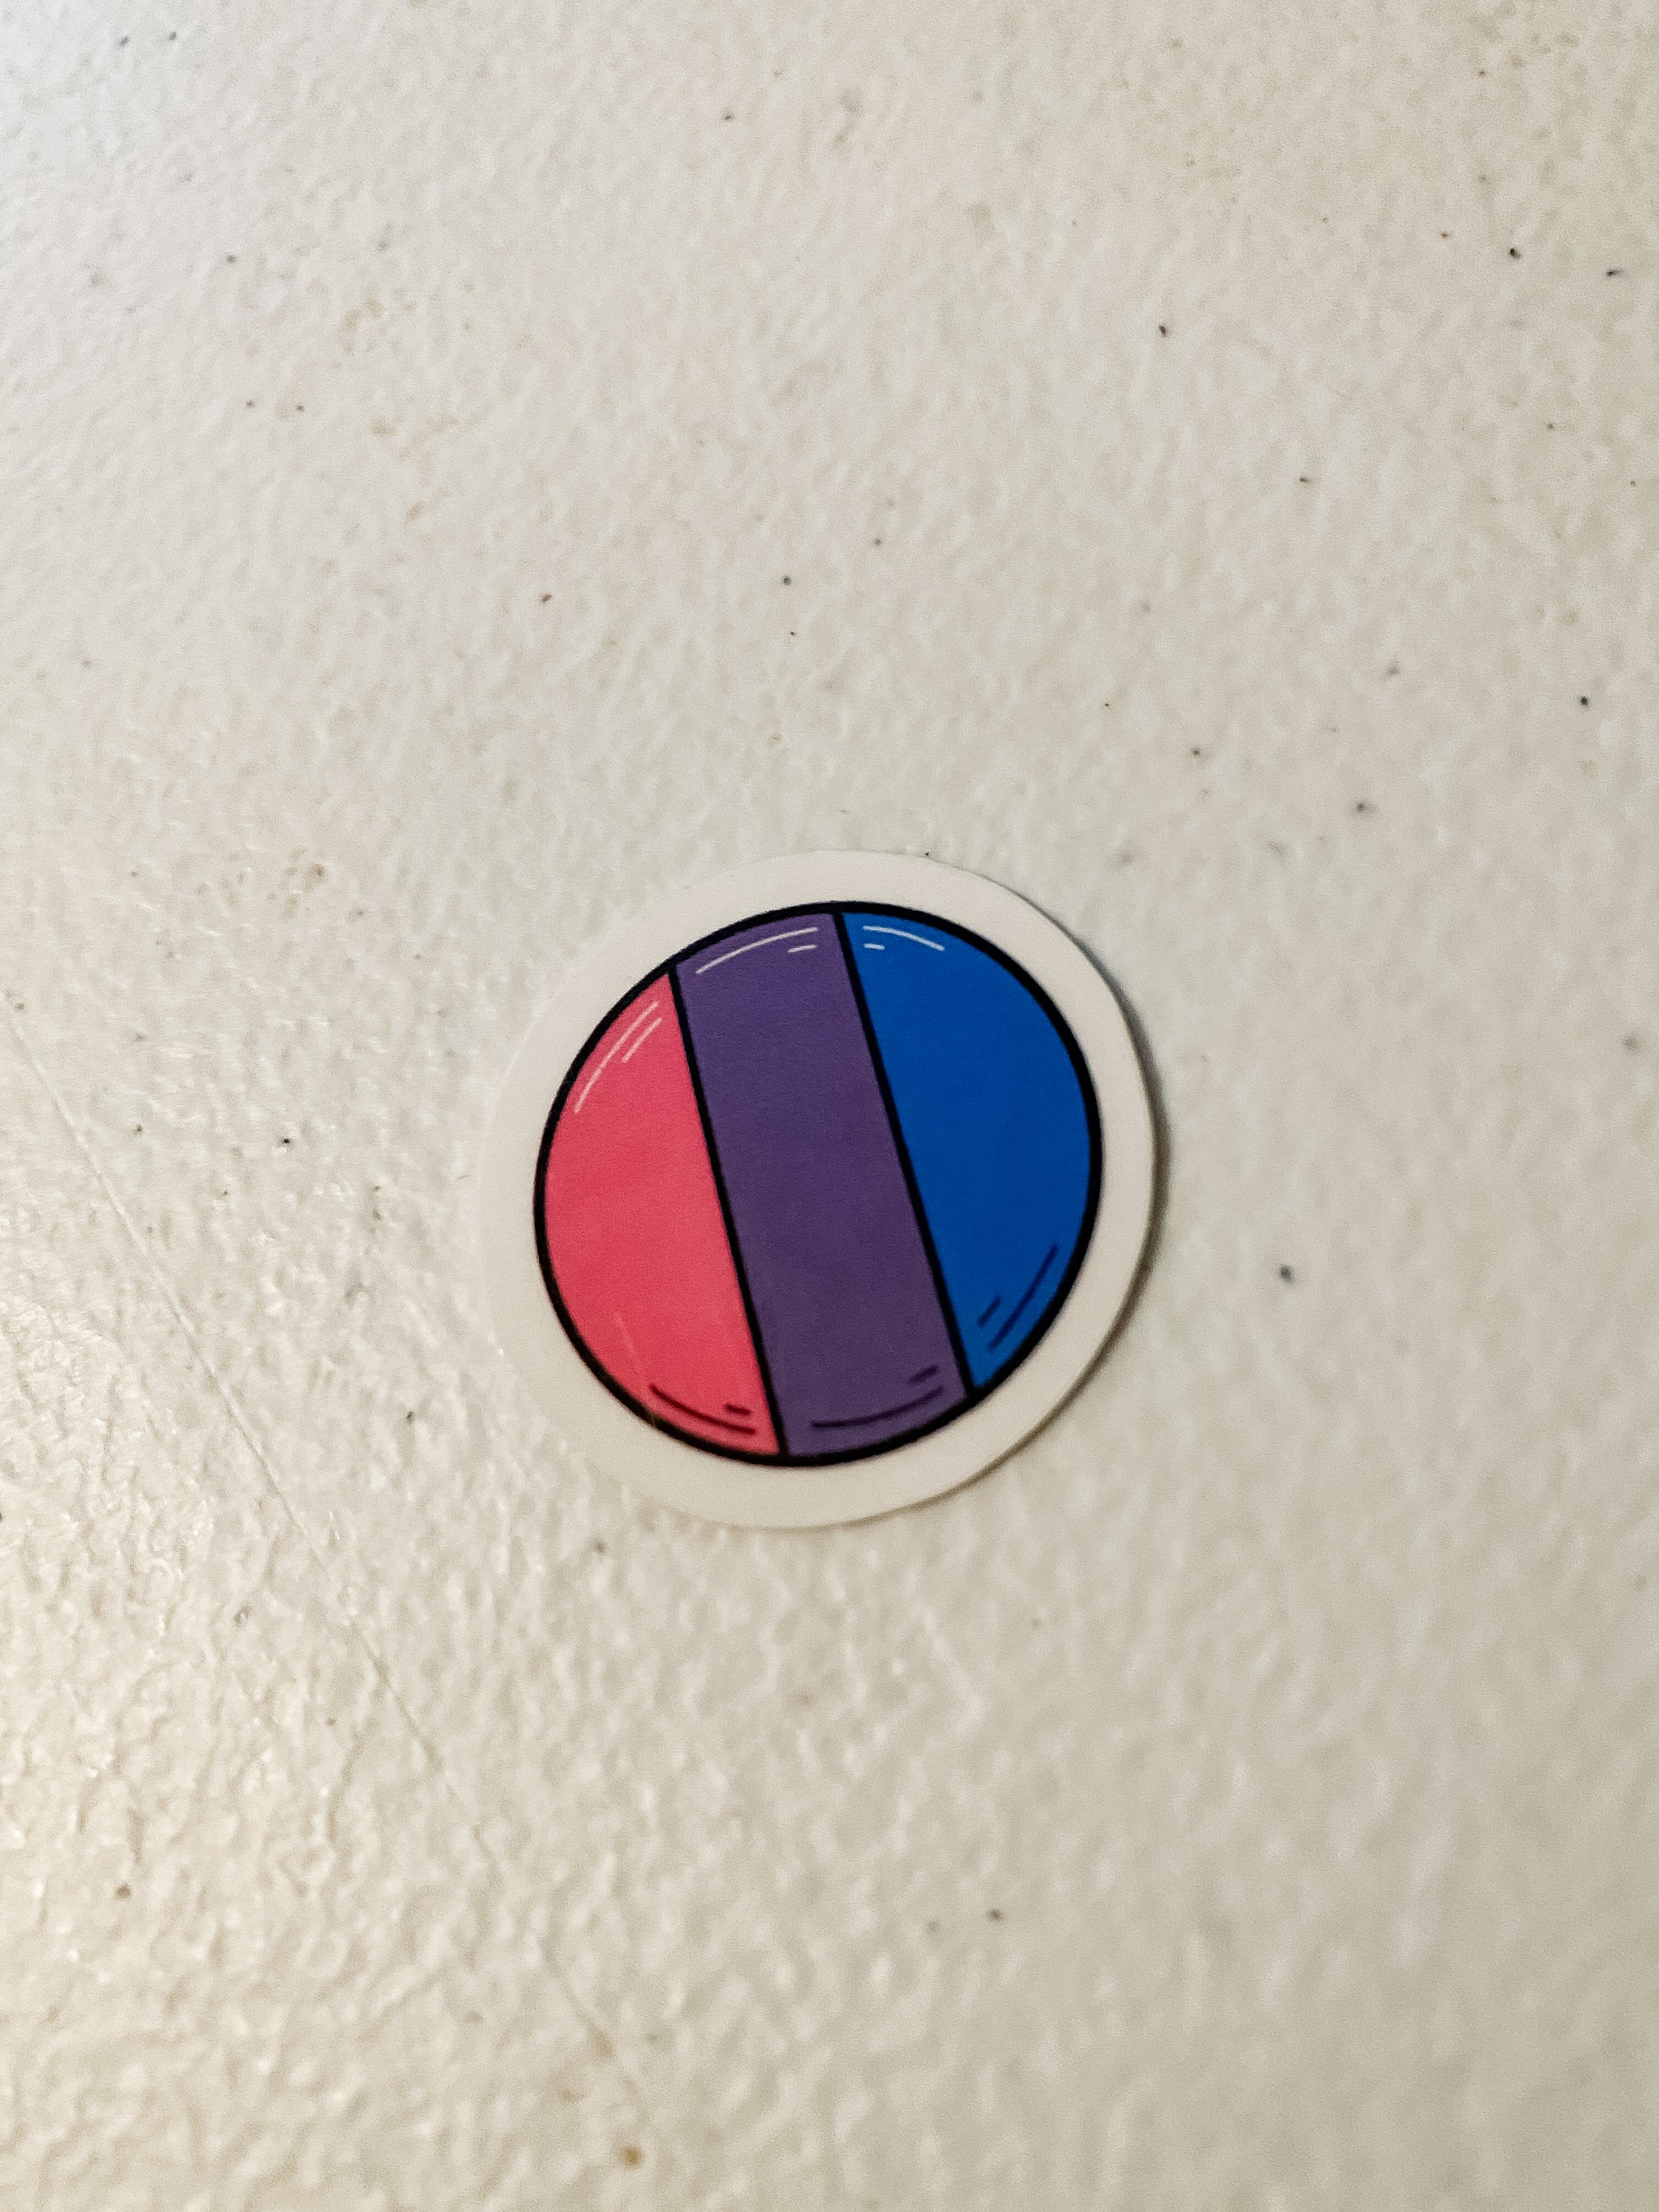 Single LGBT sticker (bisexual)